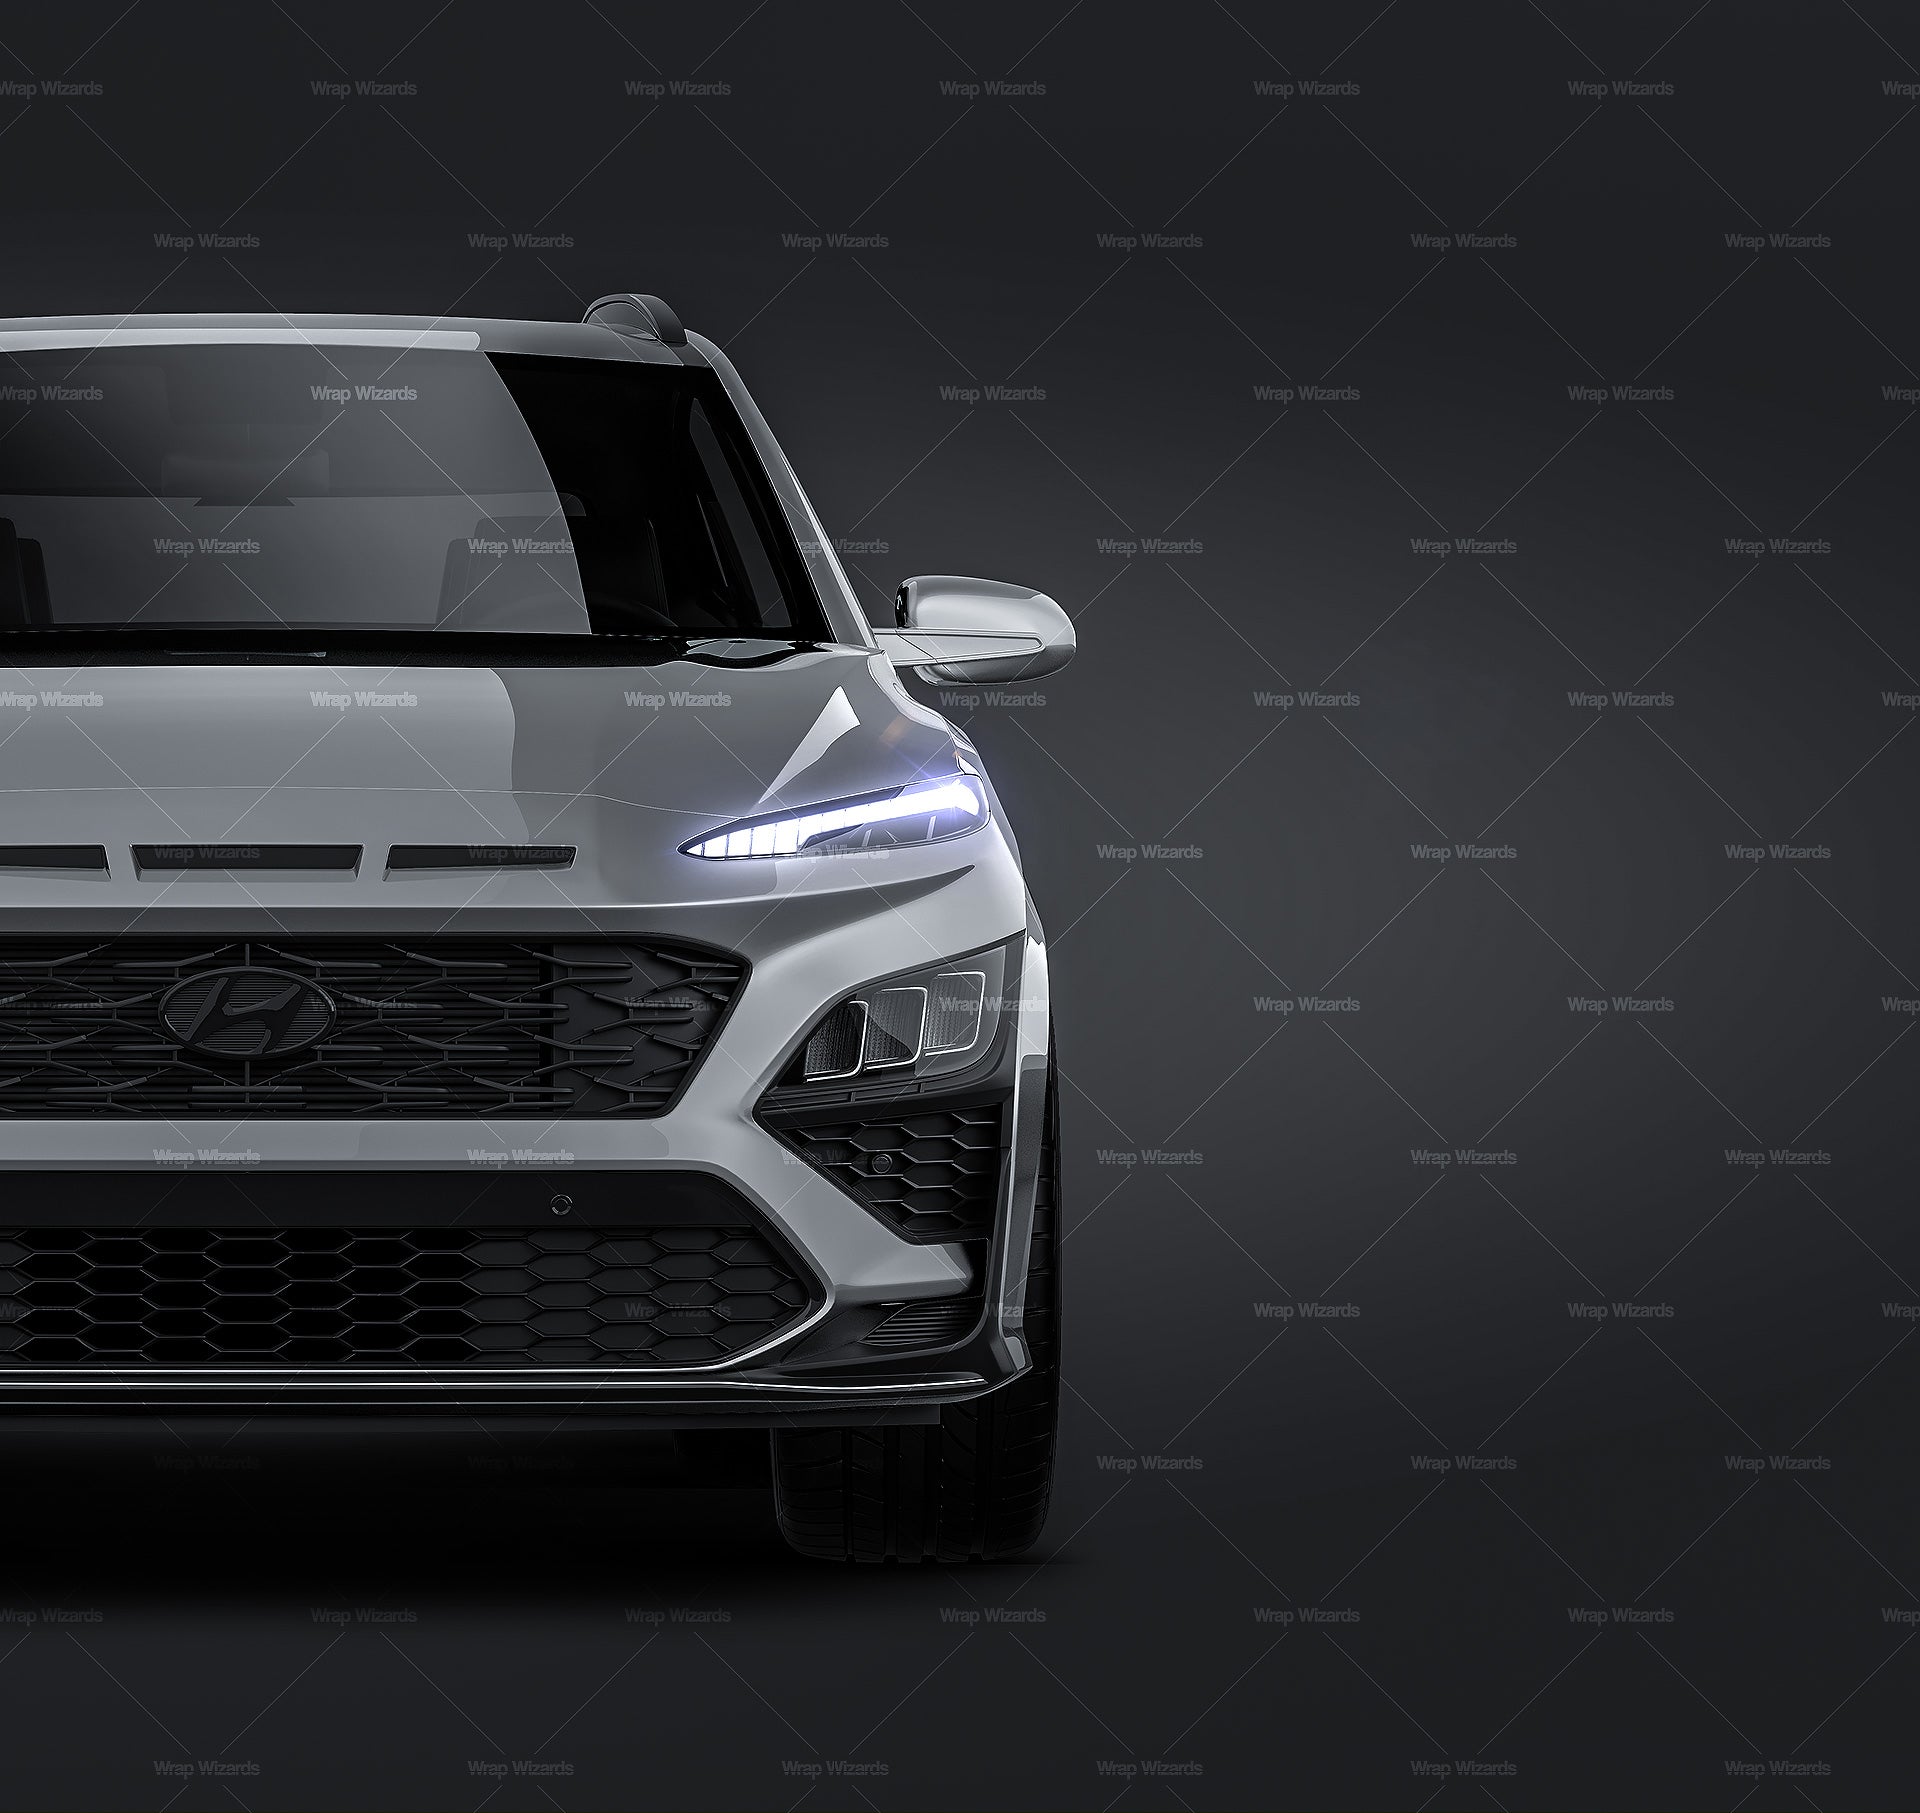 Hyundai Kona N 2021 glossy finish - all sides Car Mockup Template.psd